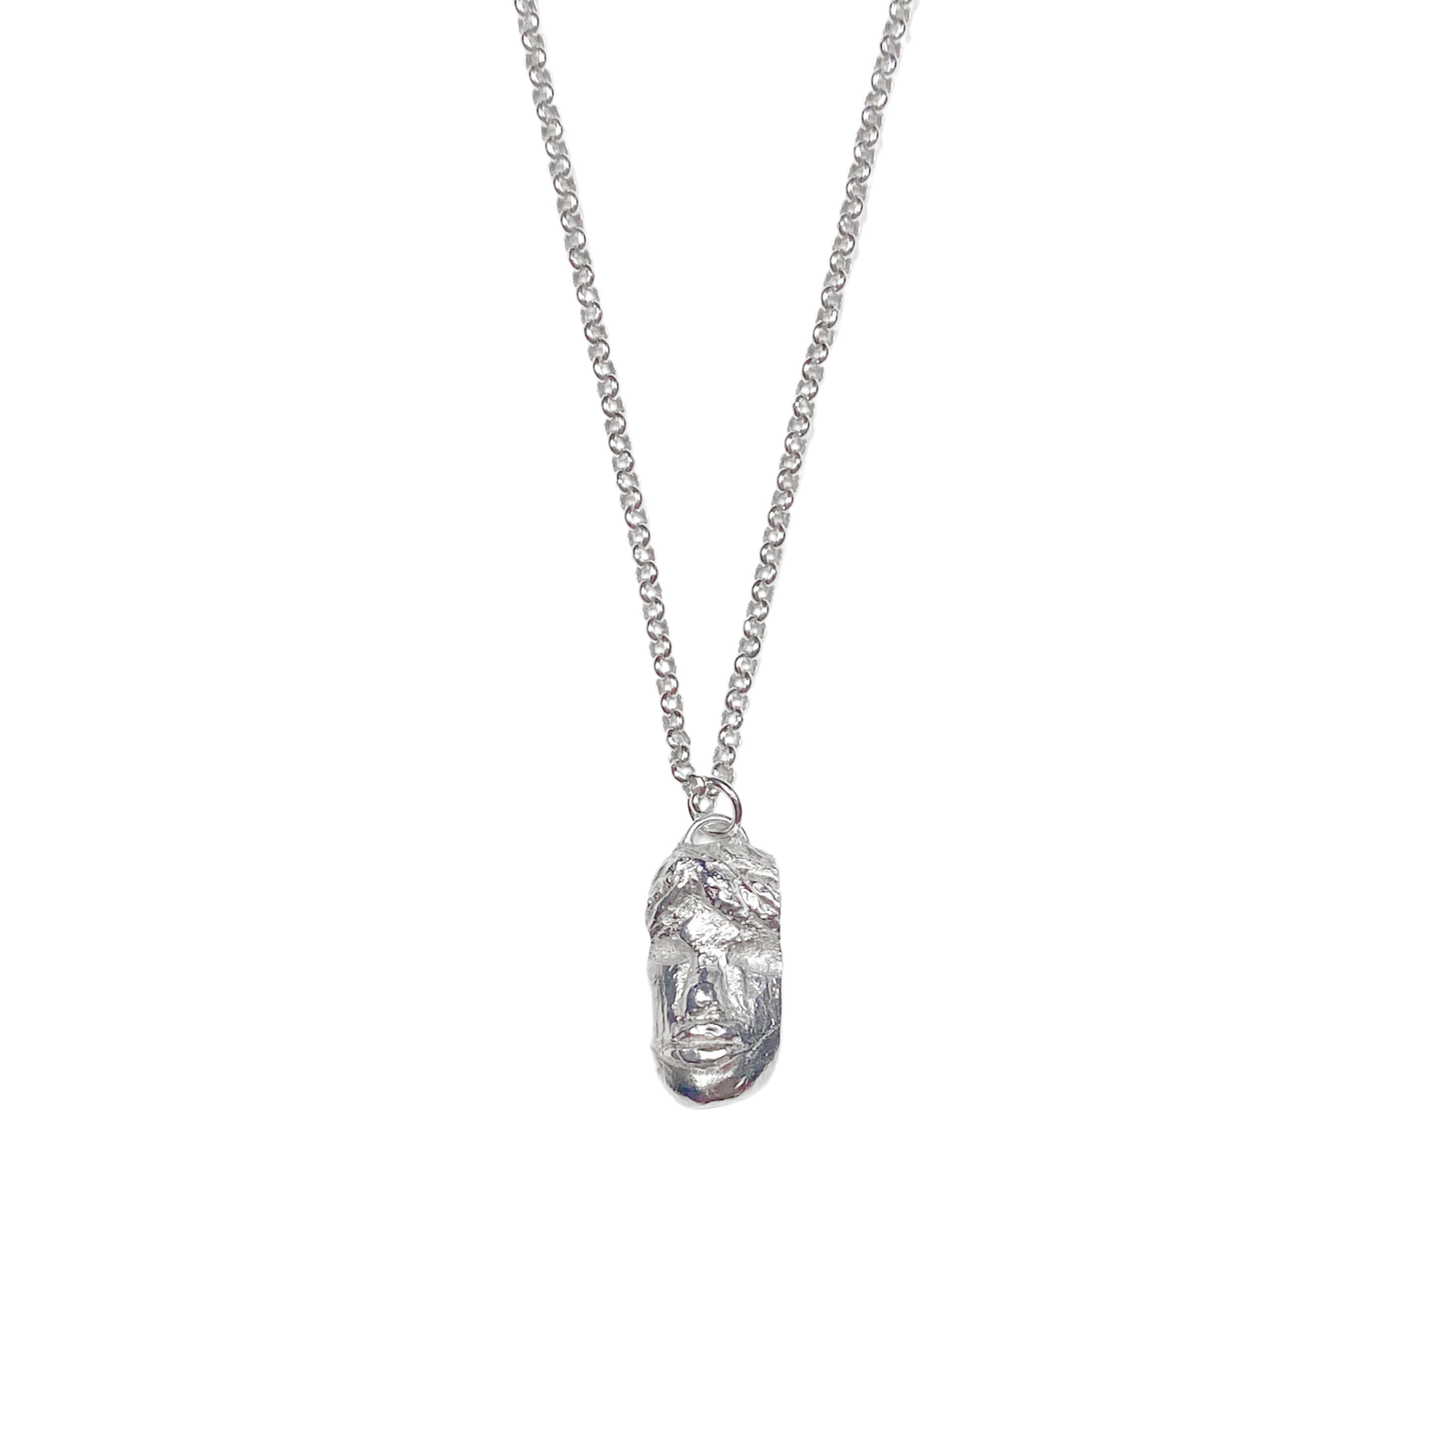 Dolorem Patrocli Necklace - embracing imperfection, echoing ancient stories - £195 - Hanifah Jewellery